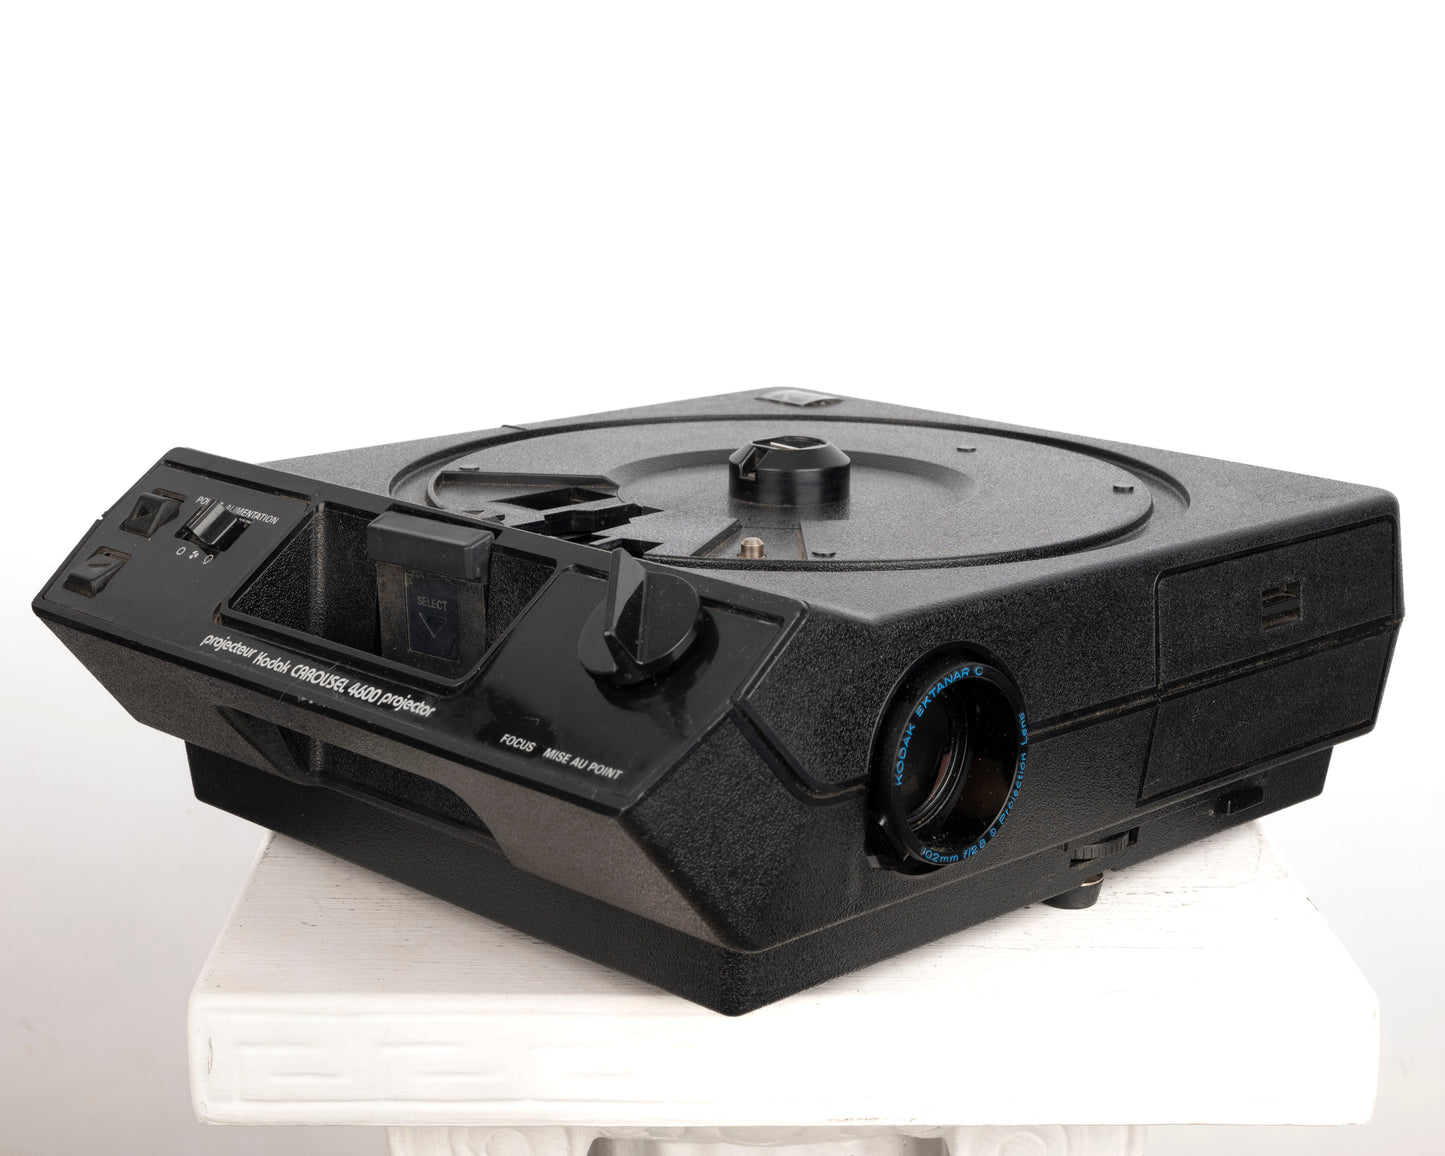 Projecteur de diapositives Kodak Carousel 4600 35 mm avec objectif Ektanar C 102 mm f2.8 (série 21513219)